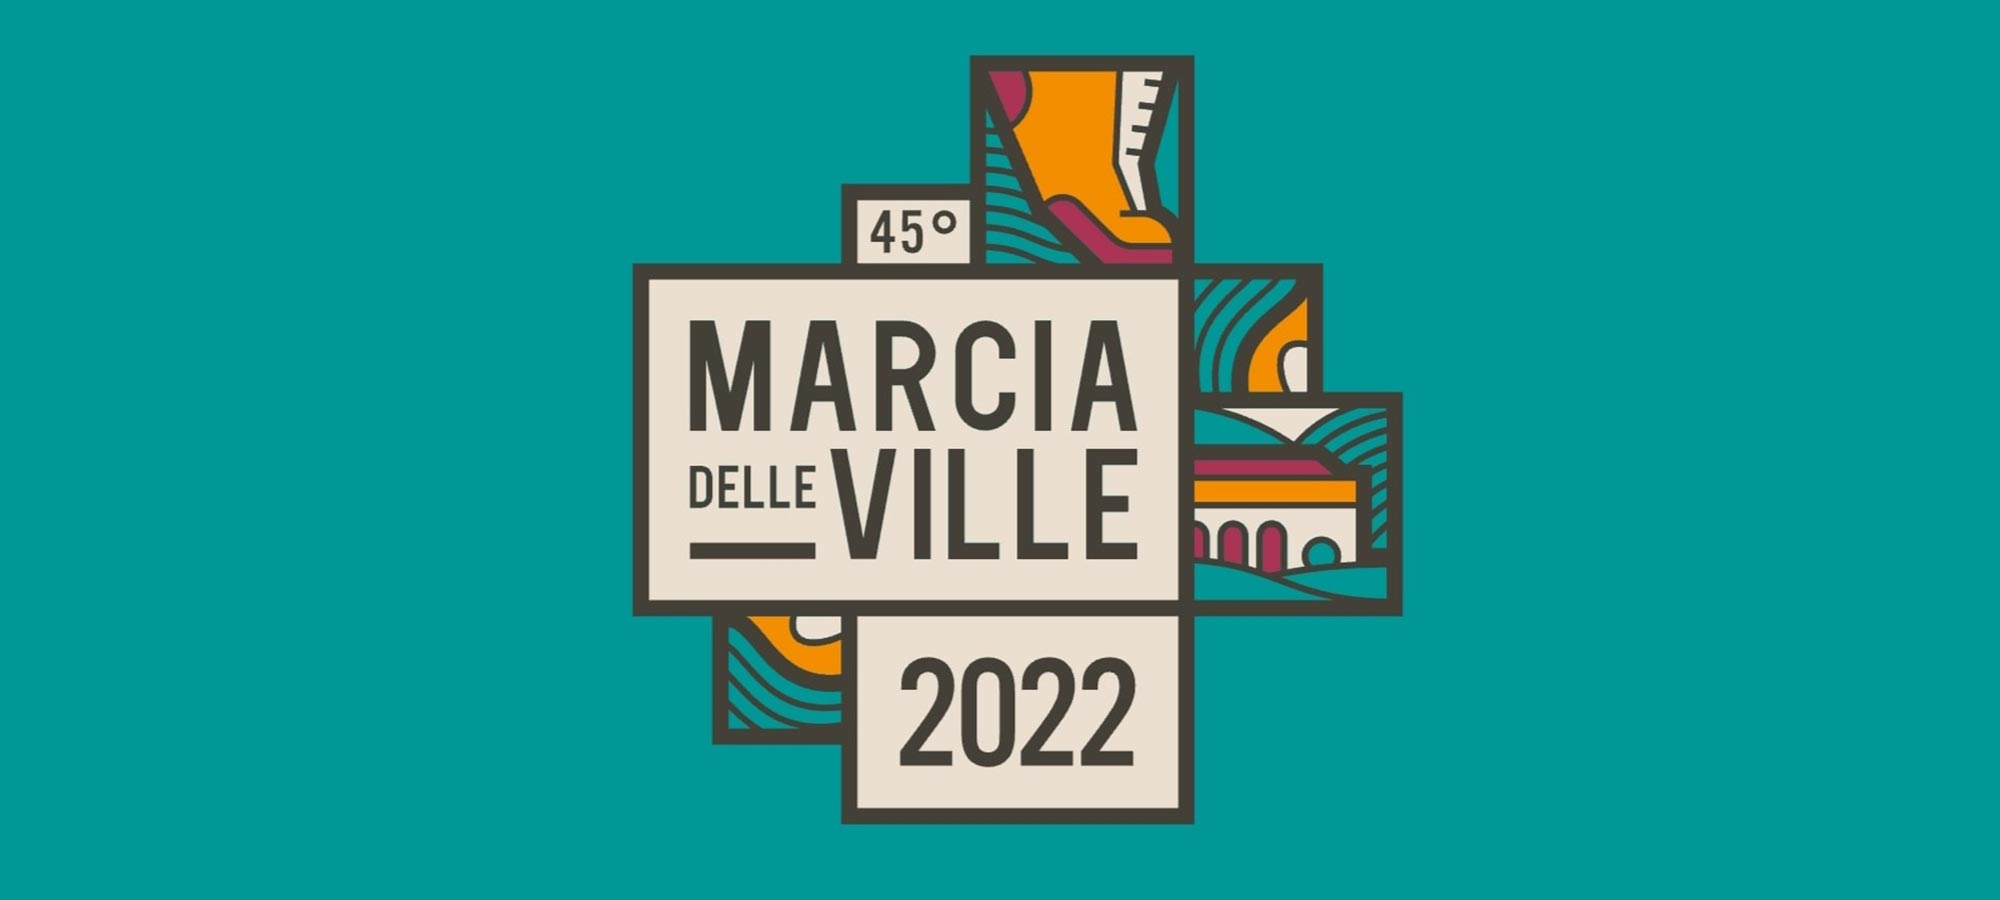 marcia delle ville 2022 logo